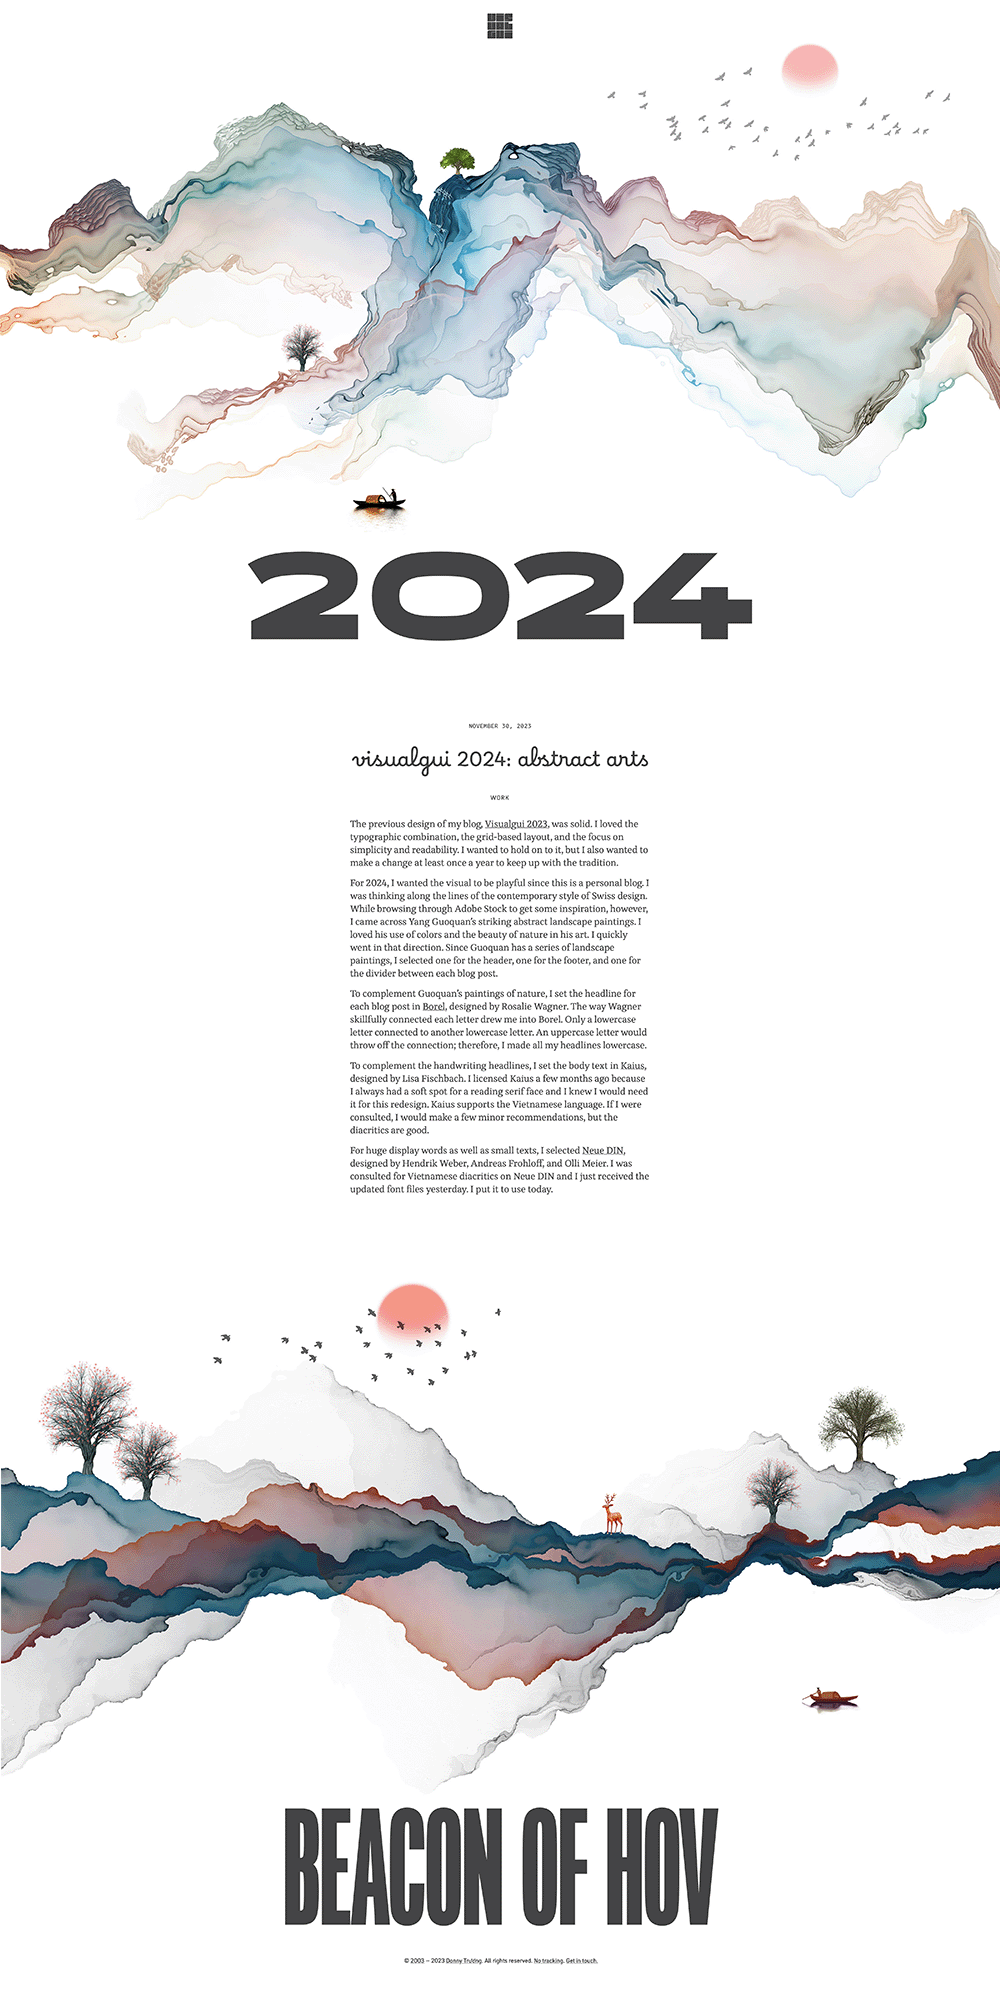 Visualgui 2024